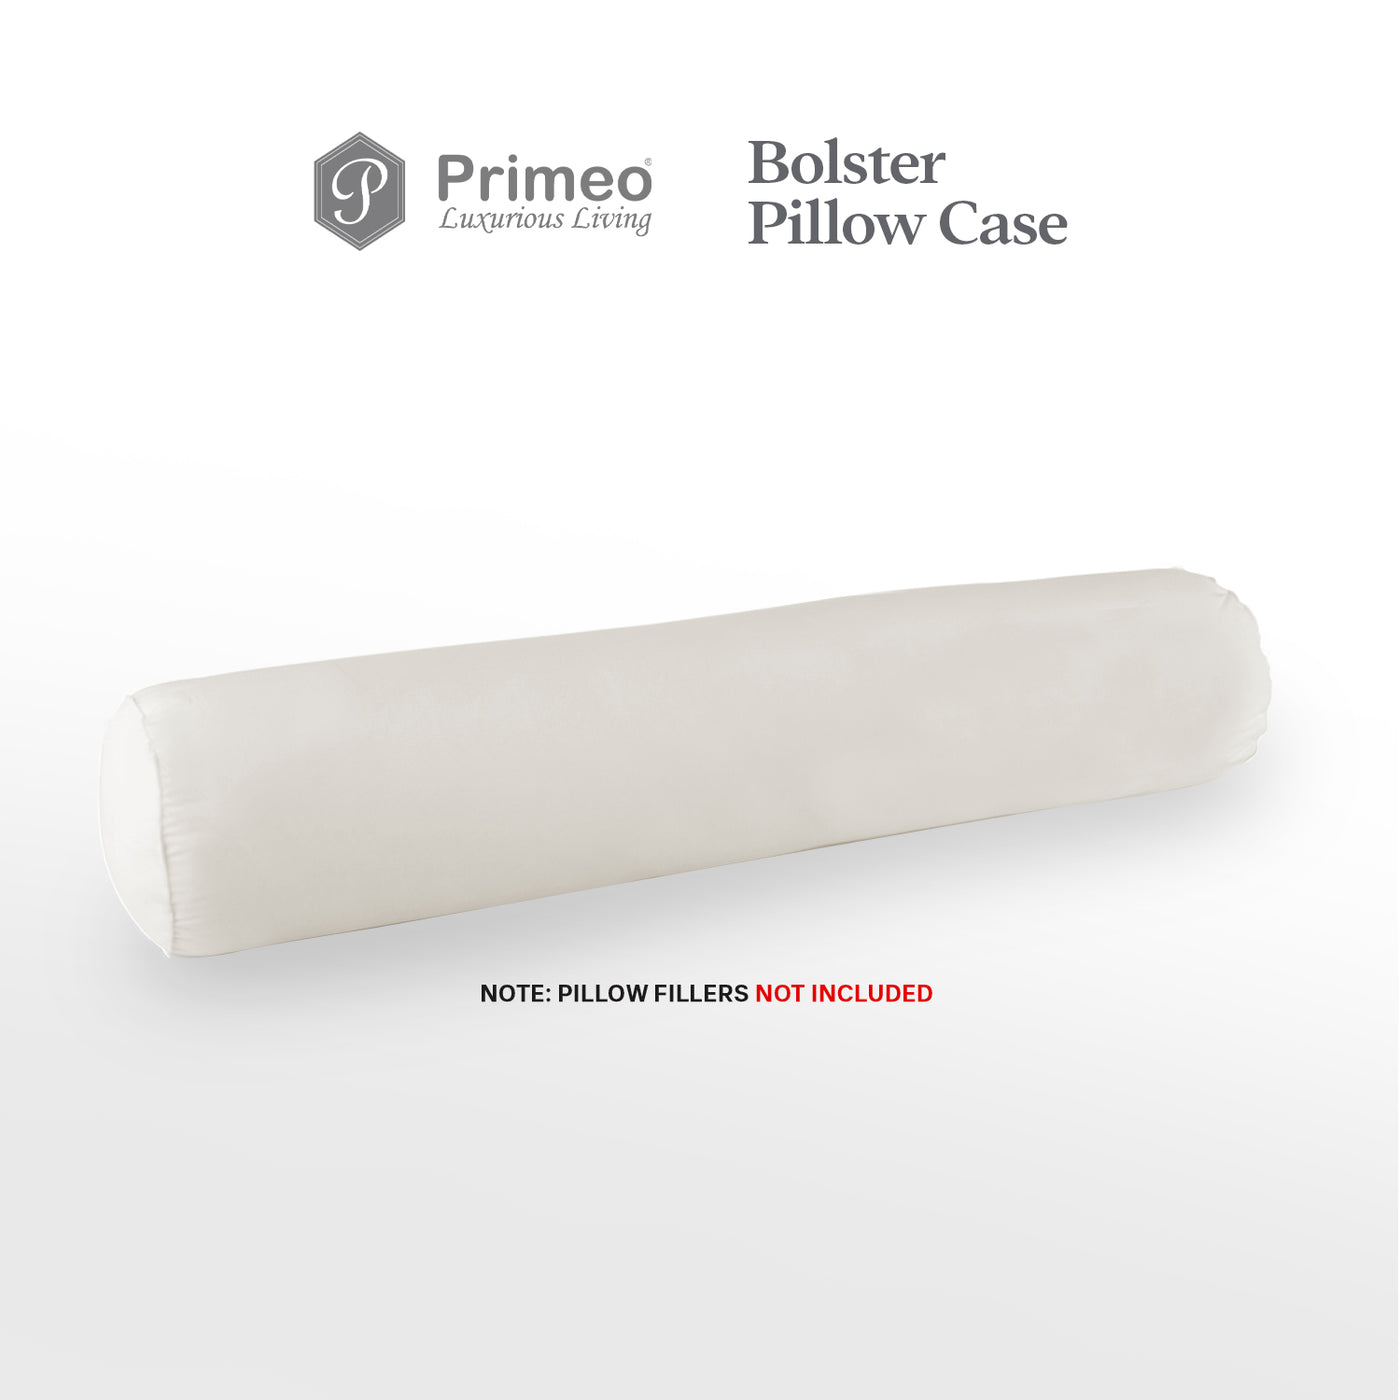 PRIMEO Premium Bolster Pillow Case Standard Size